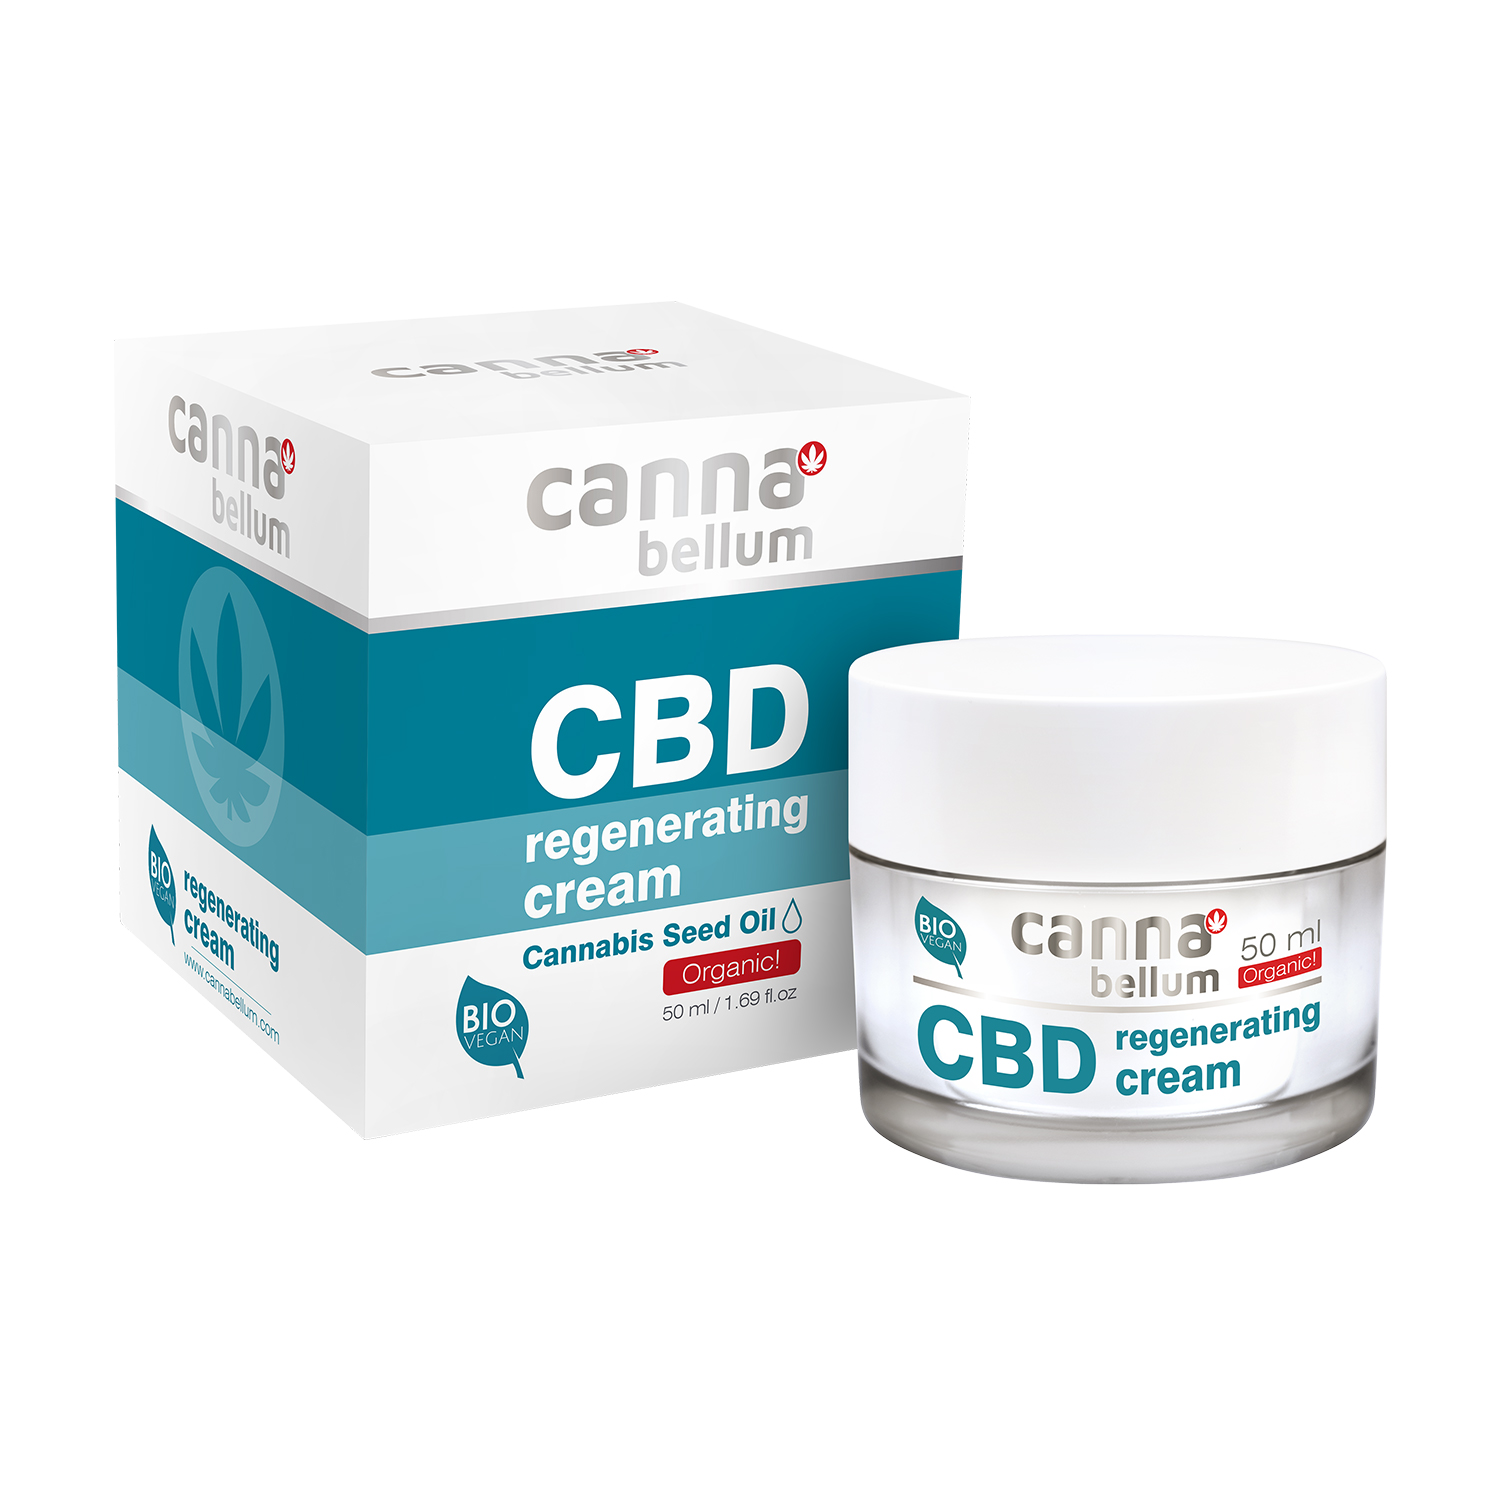 Cannabellum CBD regenerating cream 50ml P1253 komplet WEB 86